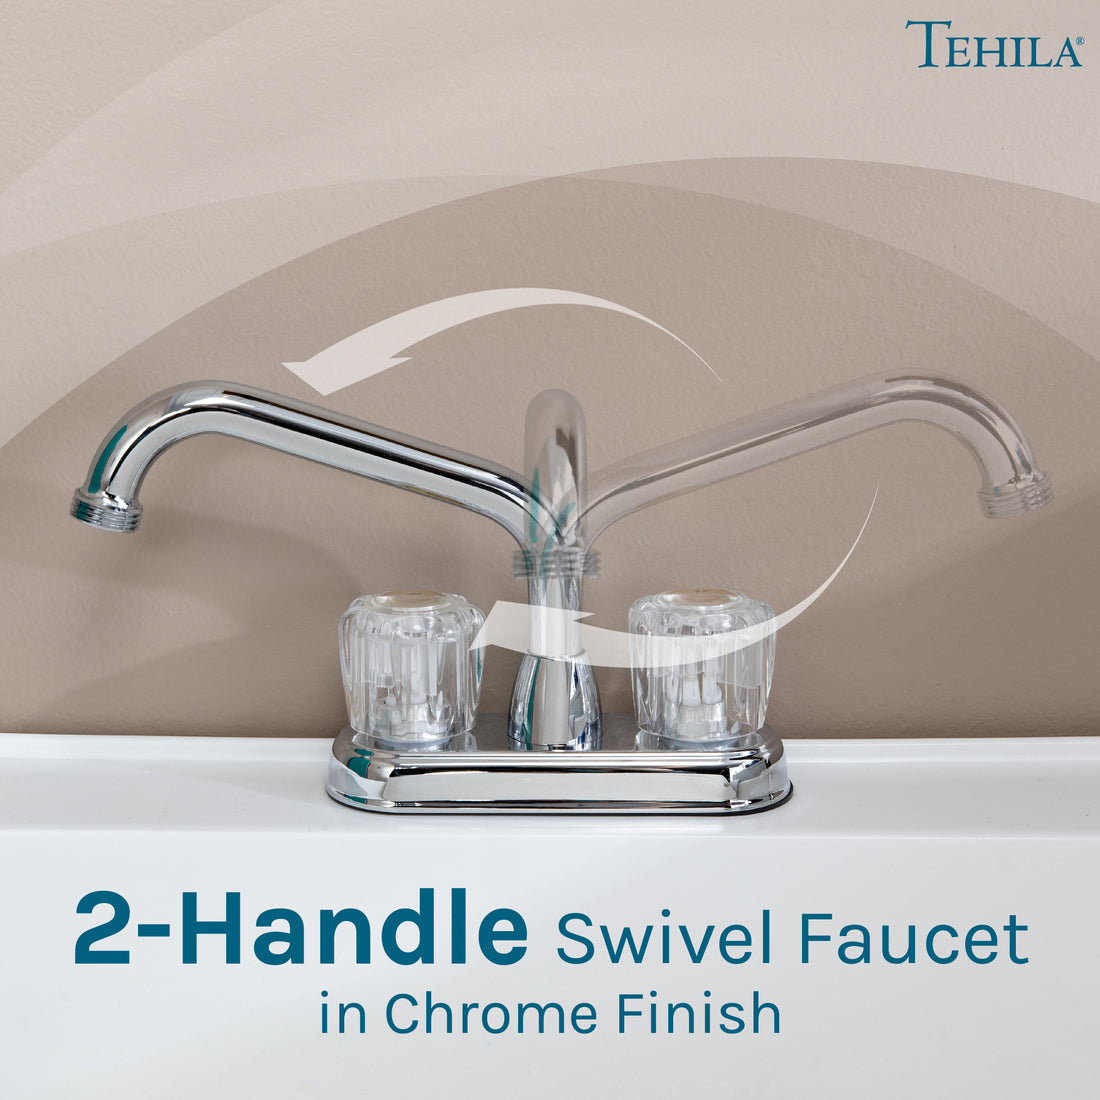 Tehila Standard Freestanding White Utility Sink with Chrome Finish Double Knob Utility Faucet - Utility-Sink.com